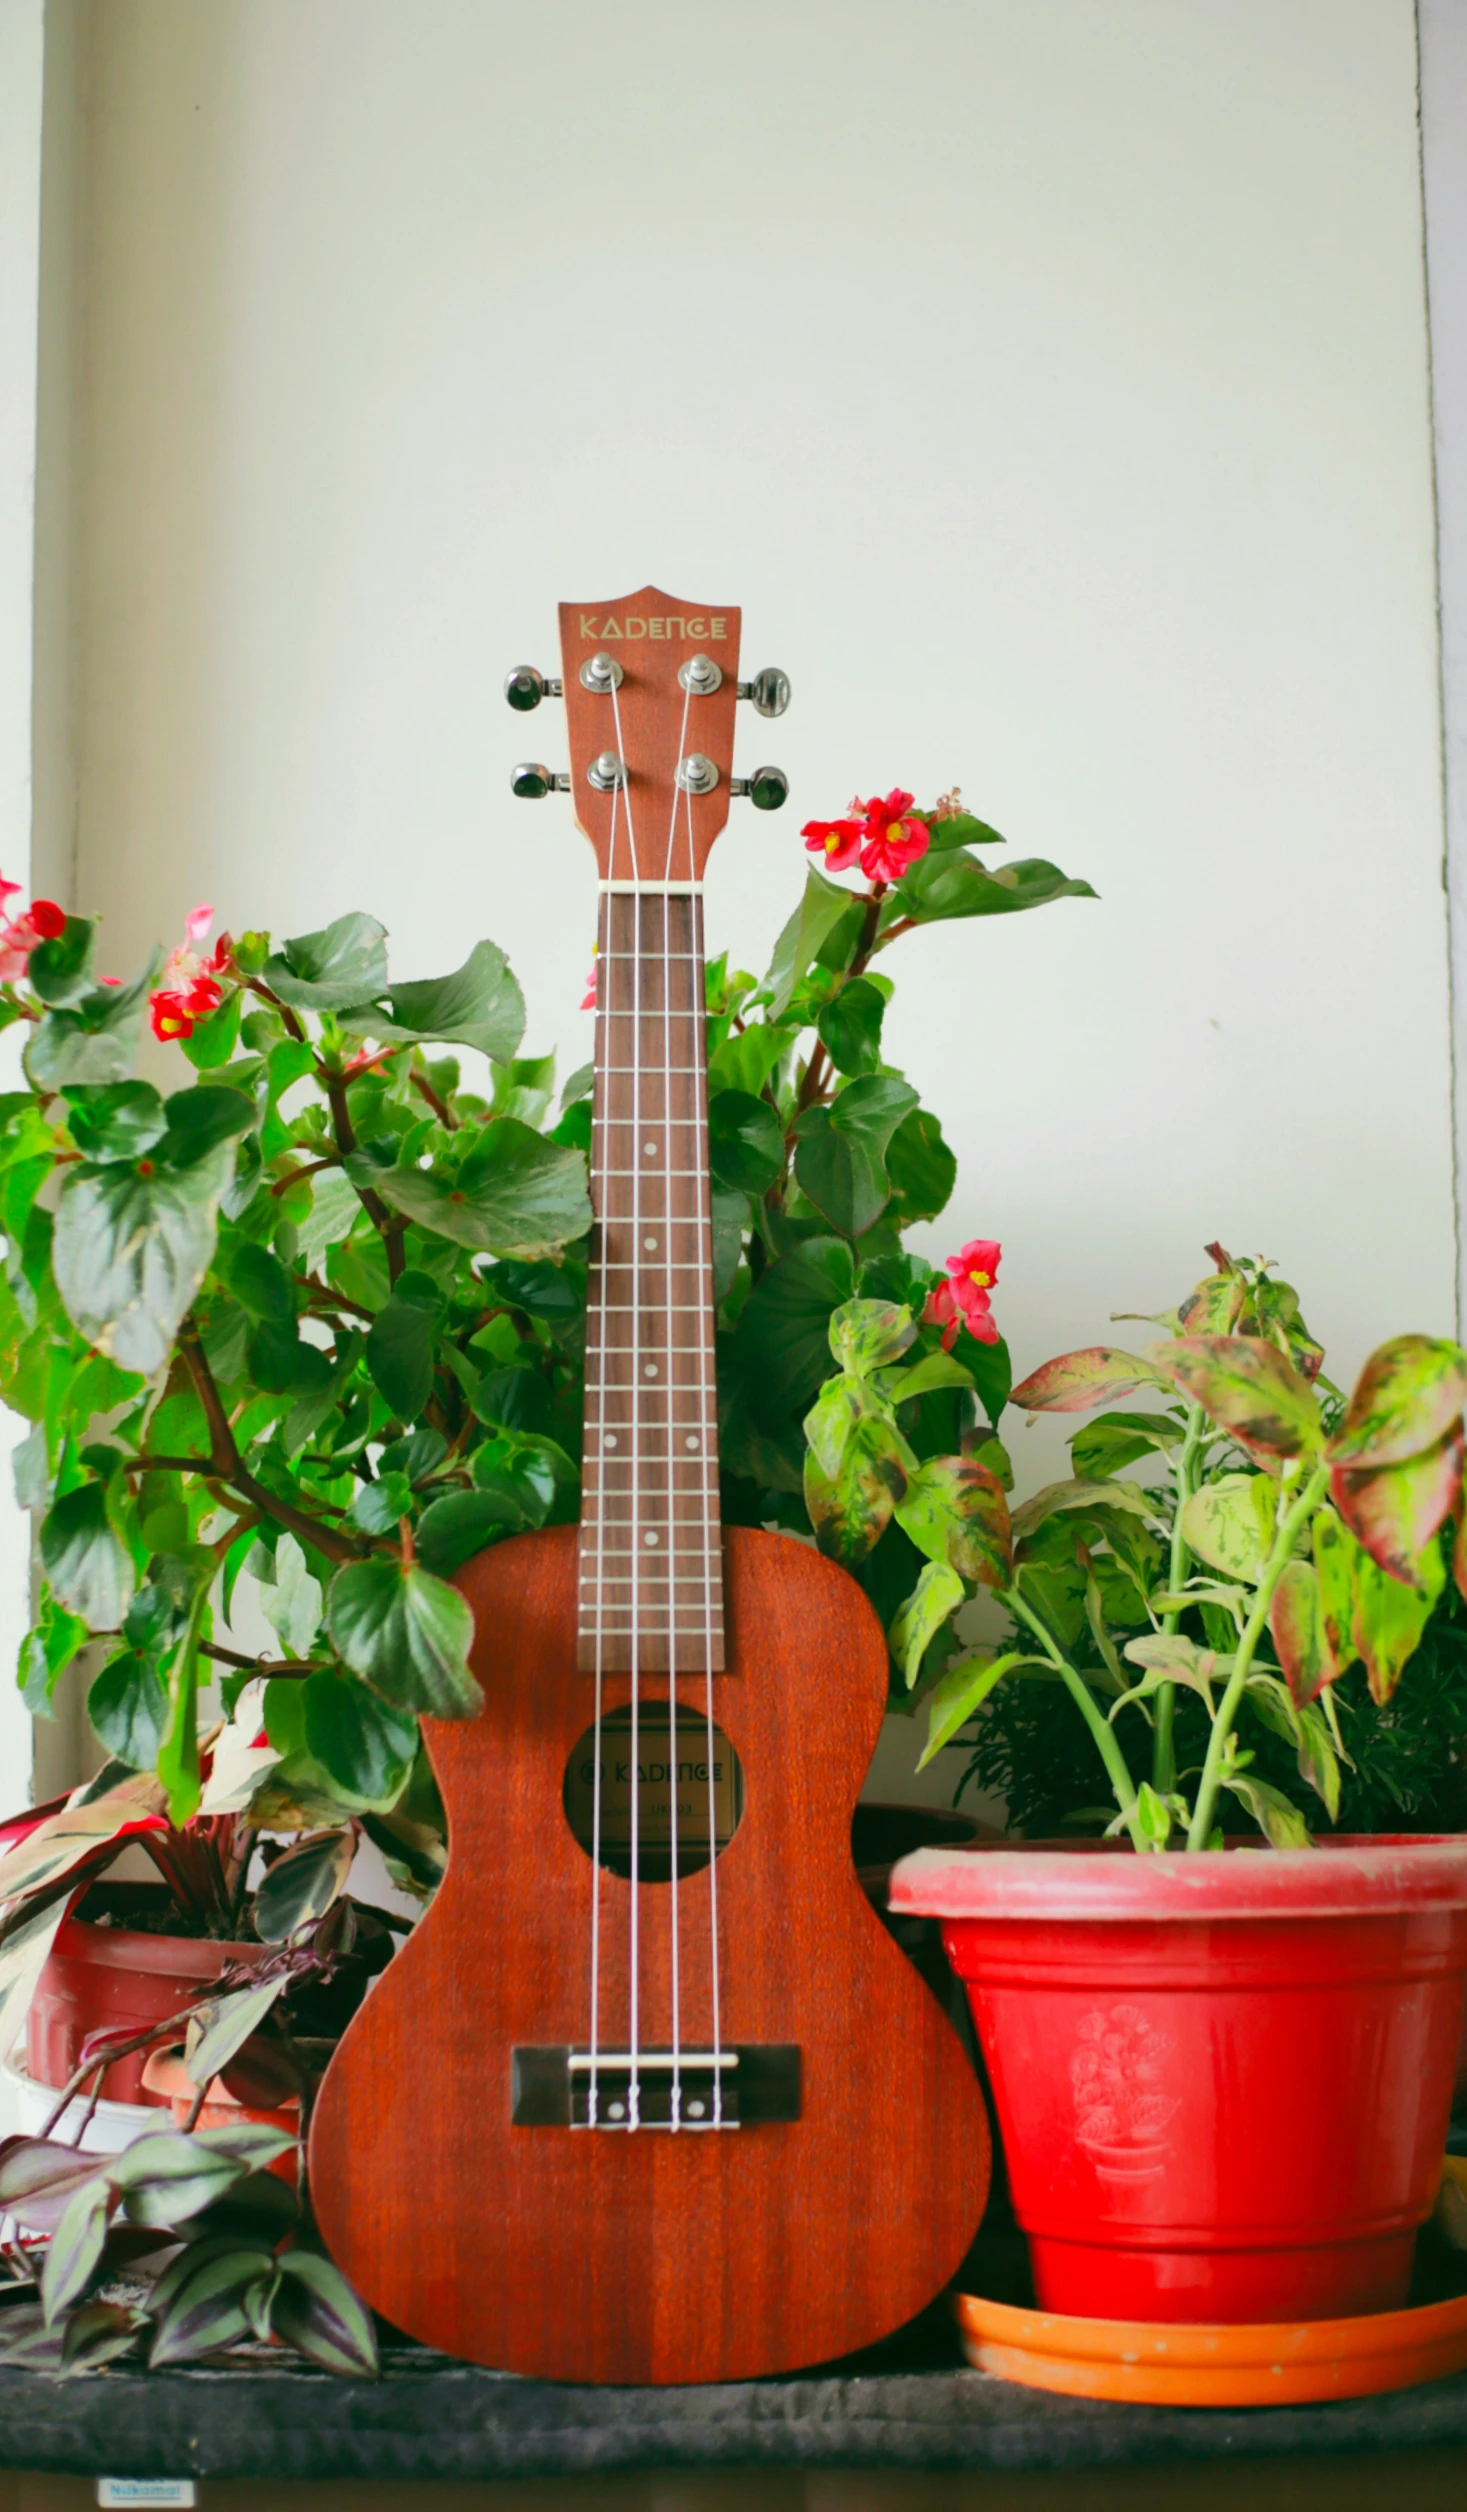 a ukulele and potted plant sitting on a ledge